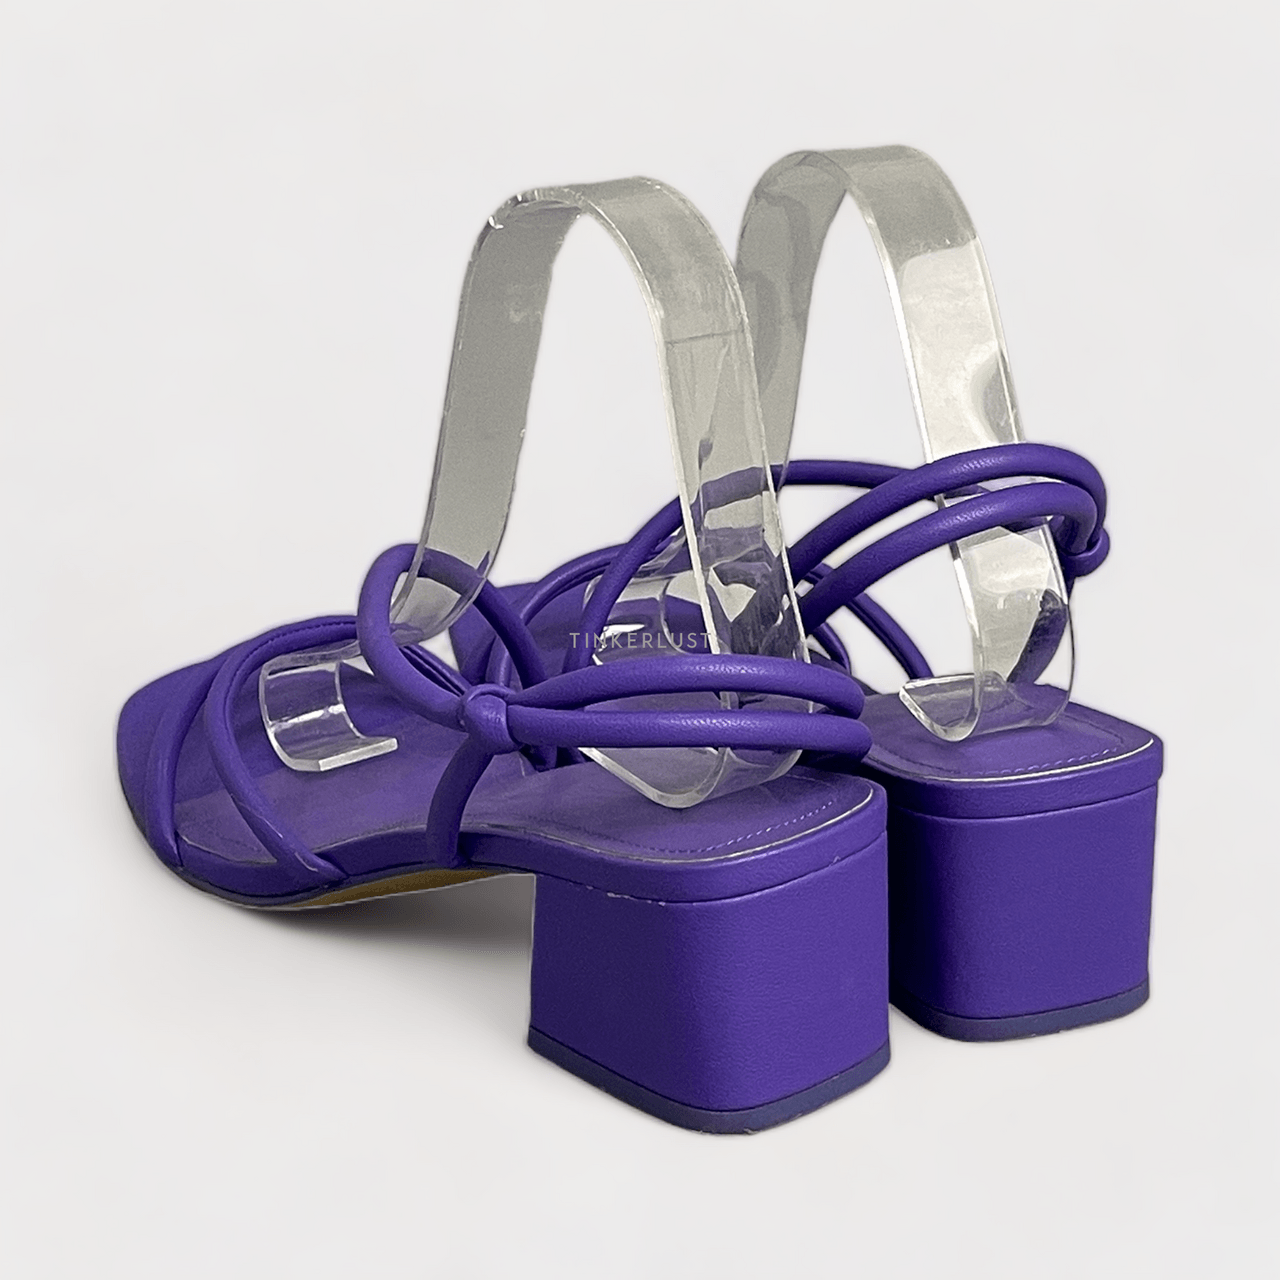 H&M Purple Heels